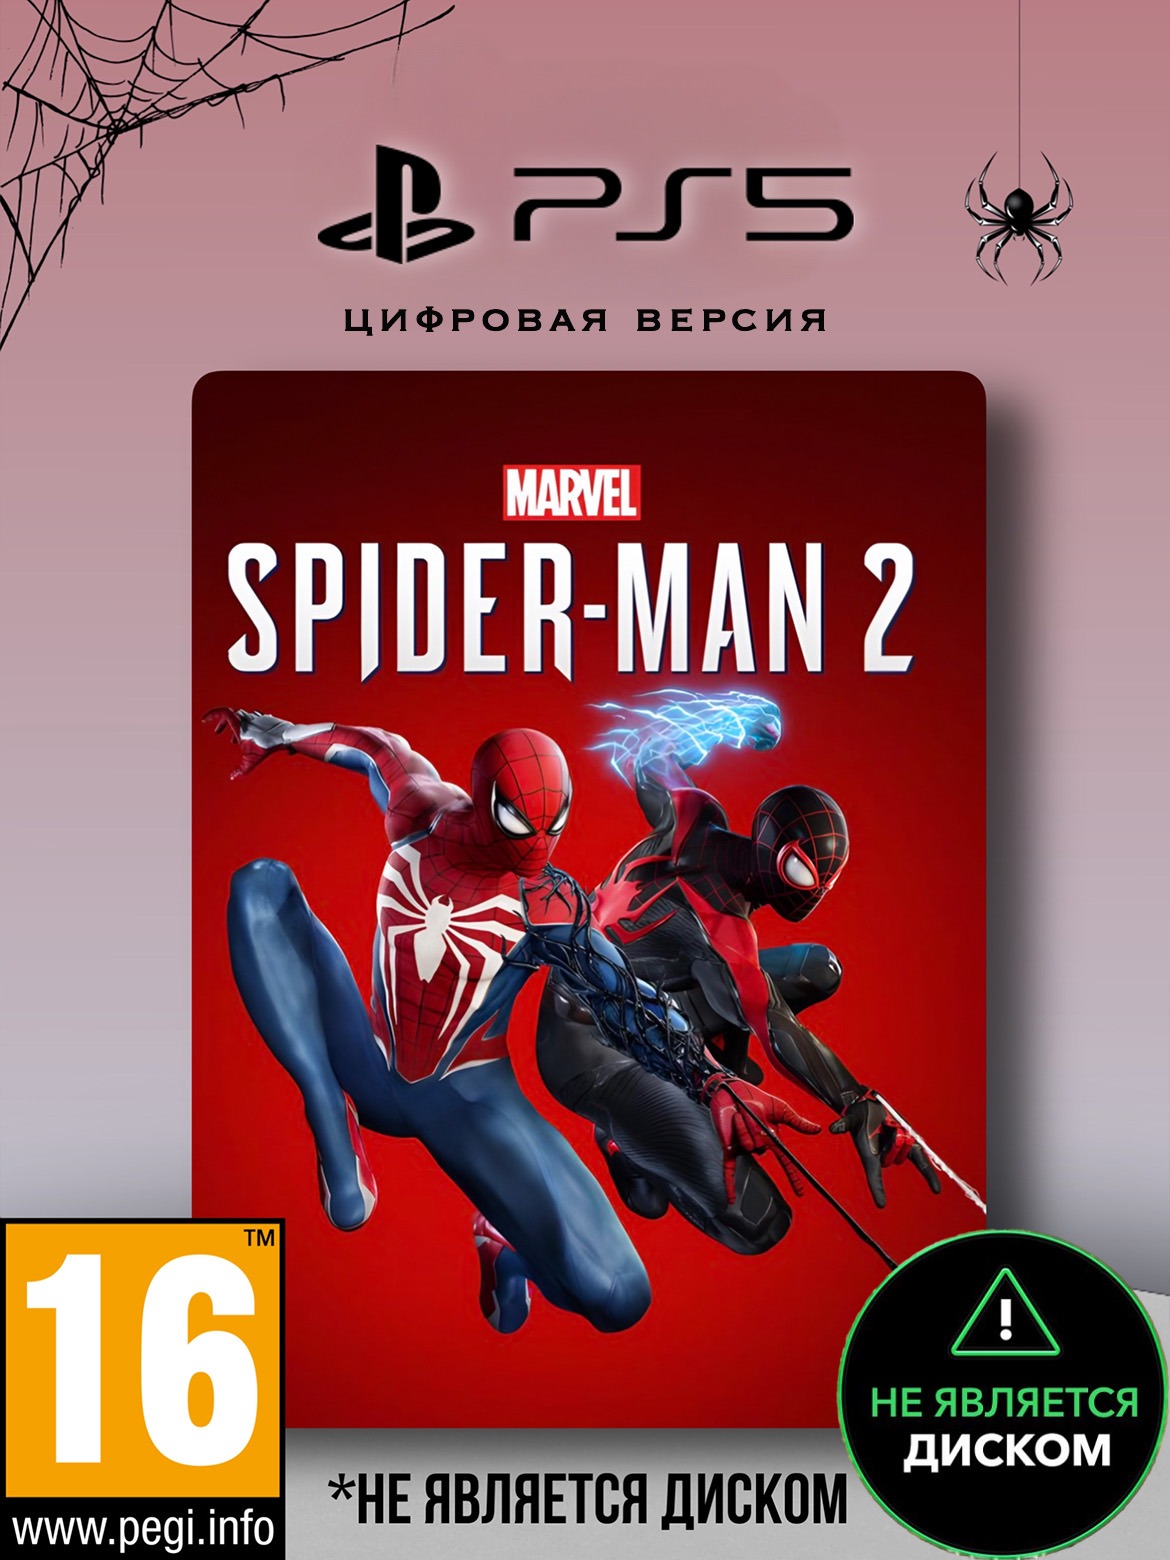 Код загрузки Marvel’s Spider-Man 2 Standart Edition для PS5